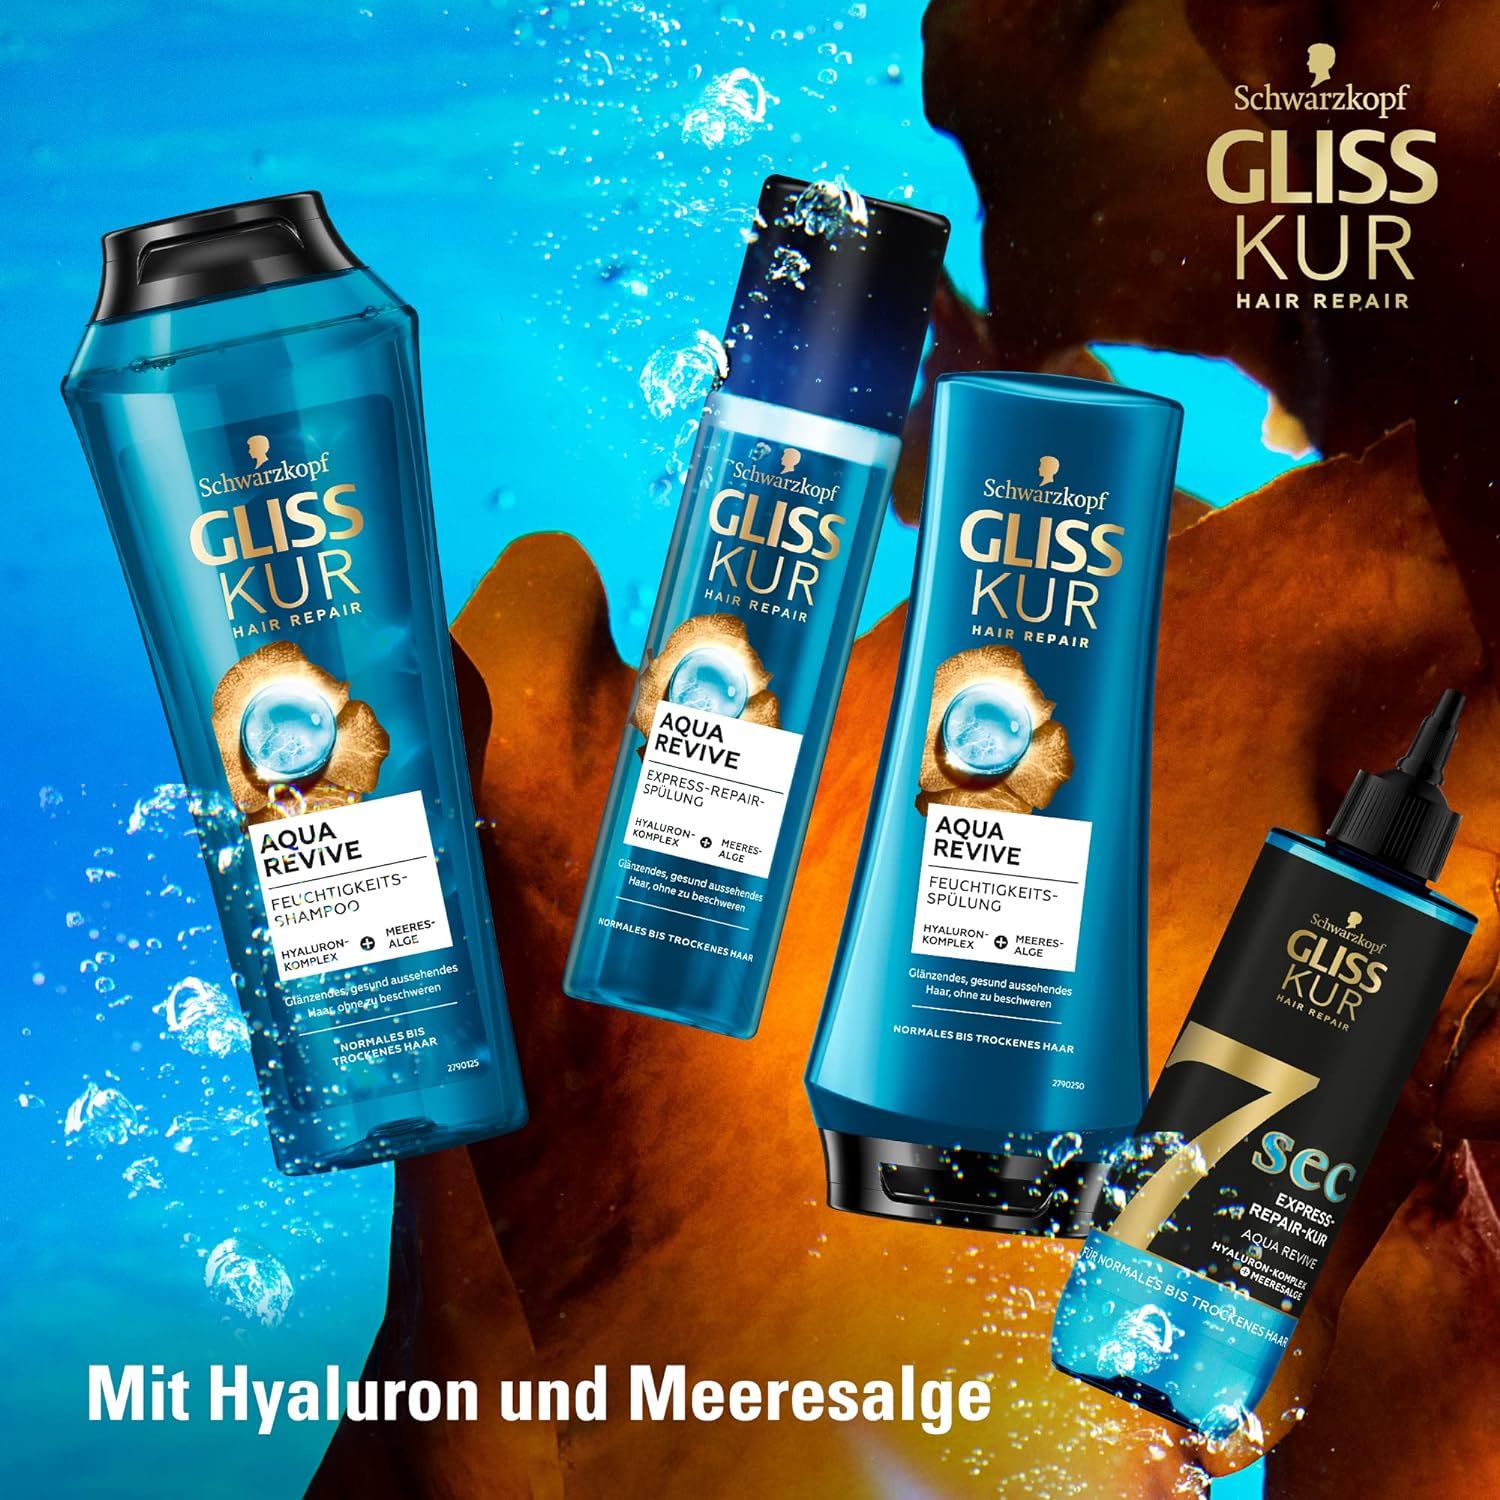 Schwarzkopf Gliss Kur 7 Sec Express-Repair-Kur Aqua Revive